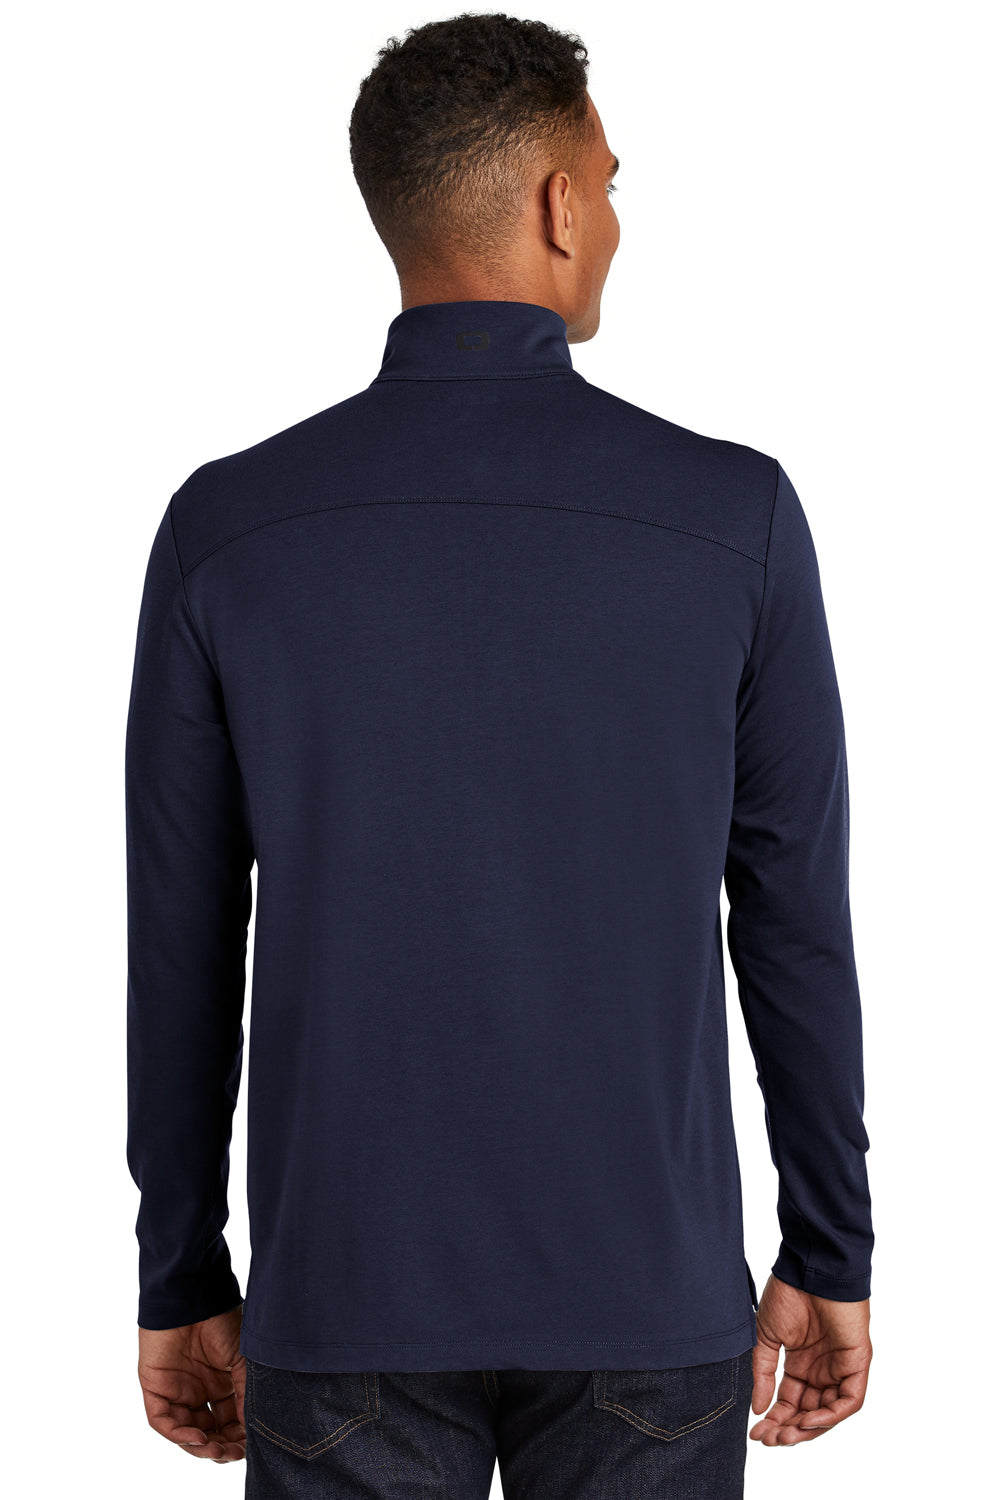 Ogio OG139 Mens Limit Moisture Wicking 1/4 Zip Sweatshirt Navy Blue Back